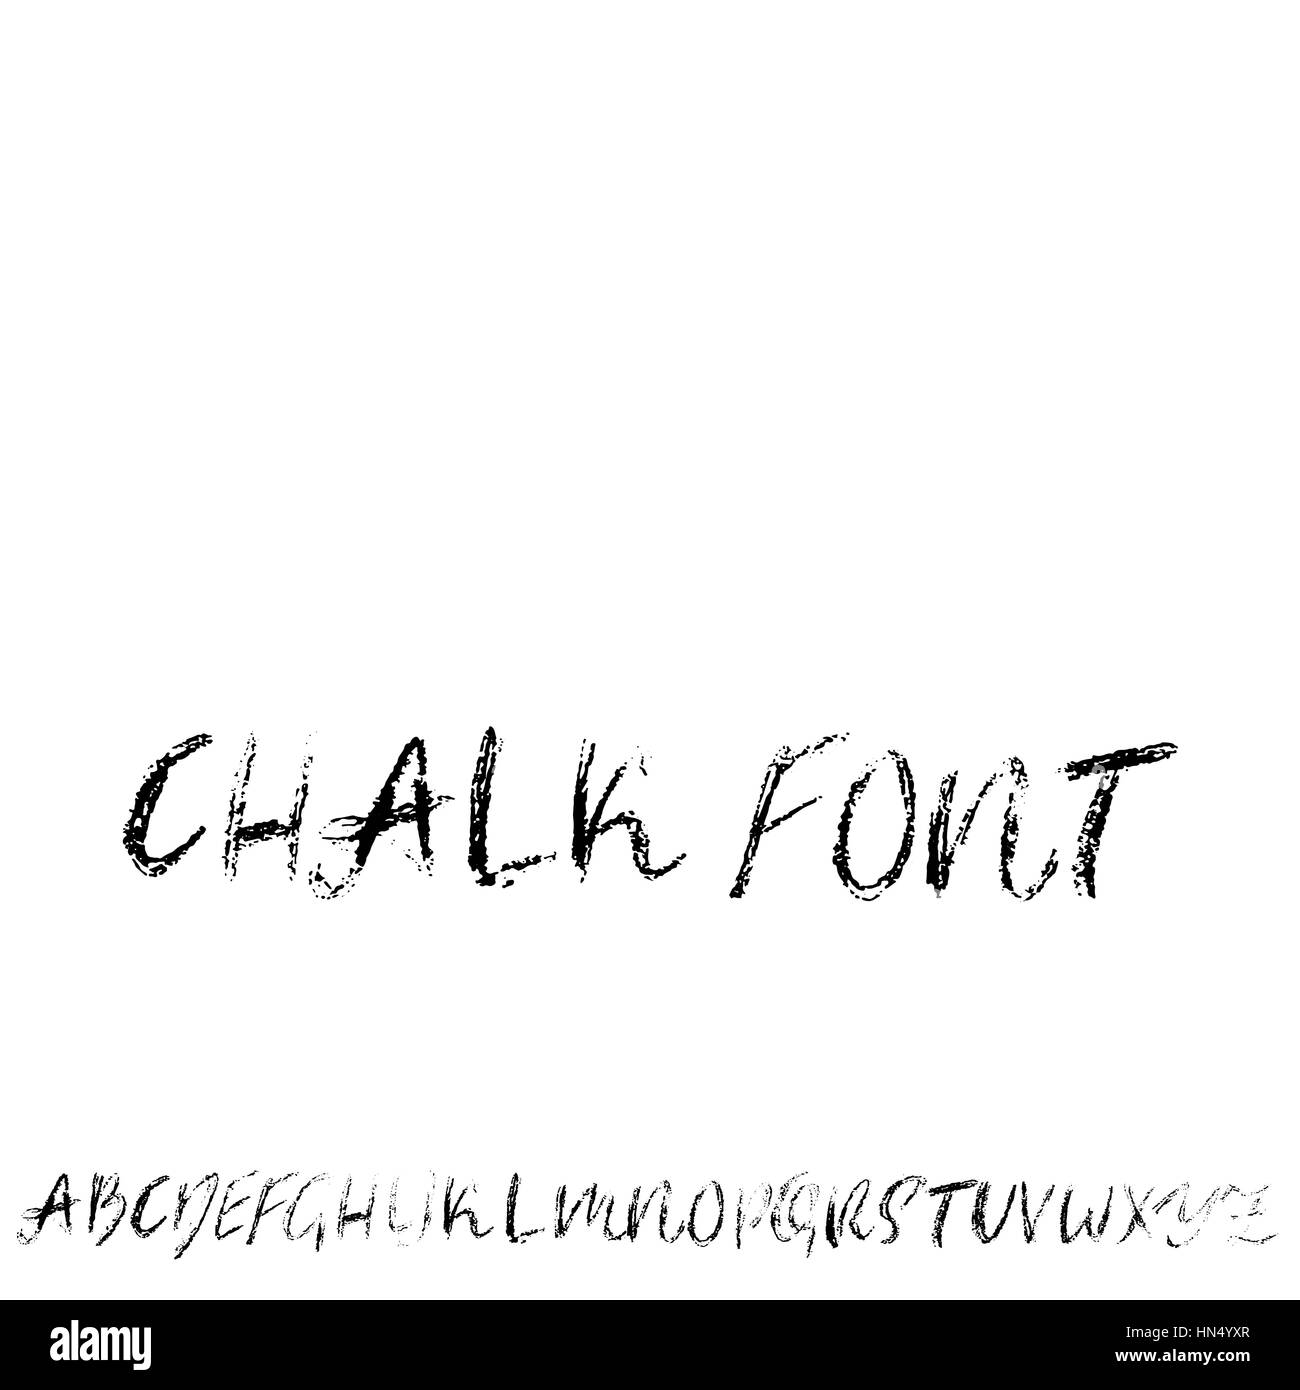 Handwritten vector chalked alphabet. Imitation texture of chalk. Modern hand drawn alphabet. Isolated letters. Stock Vector